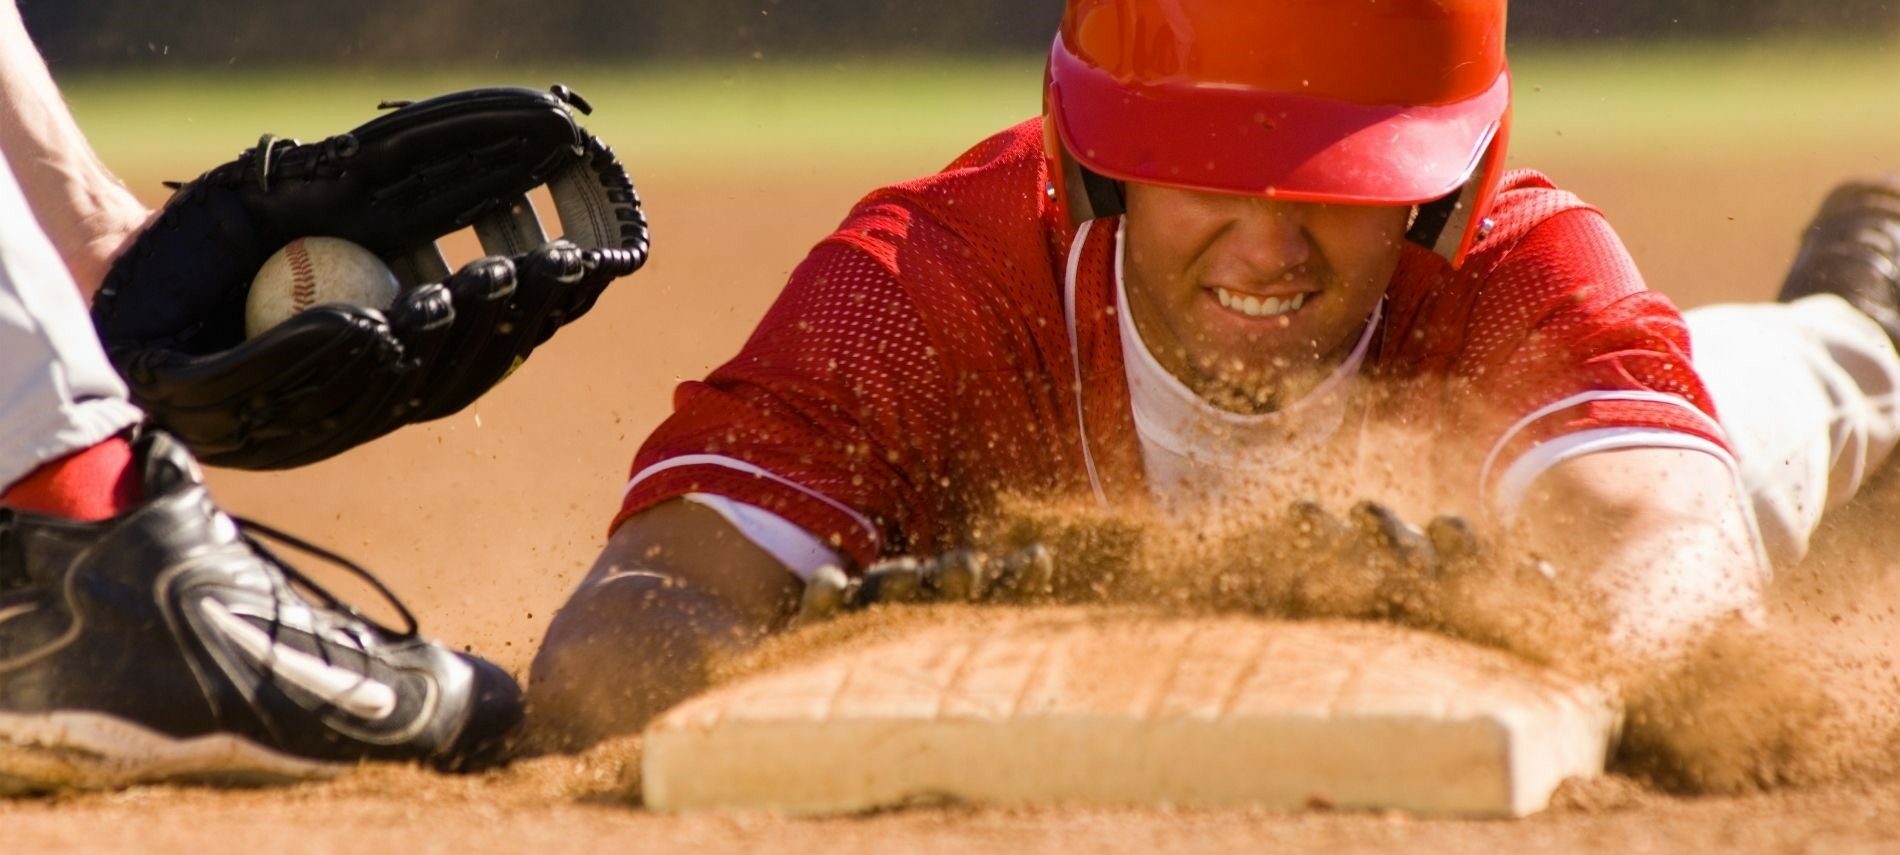 Baseball player sliding into home base